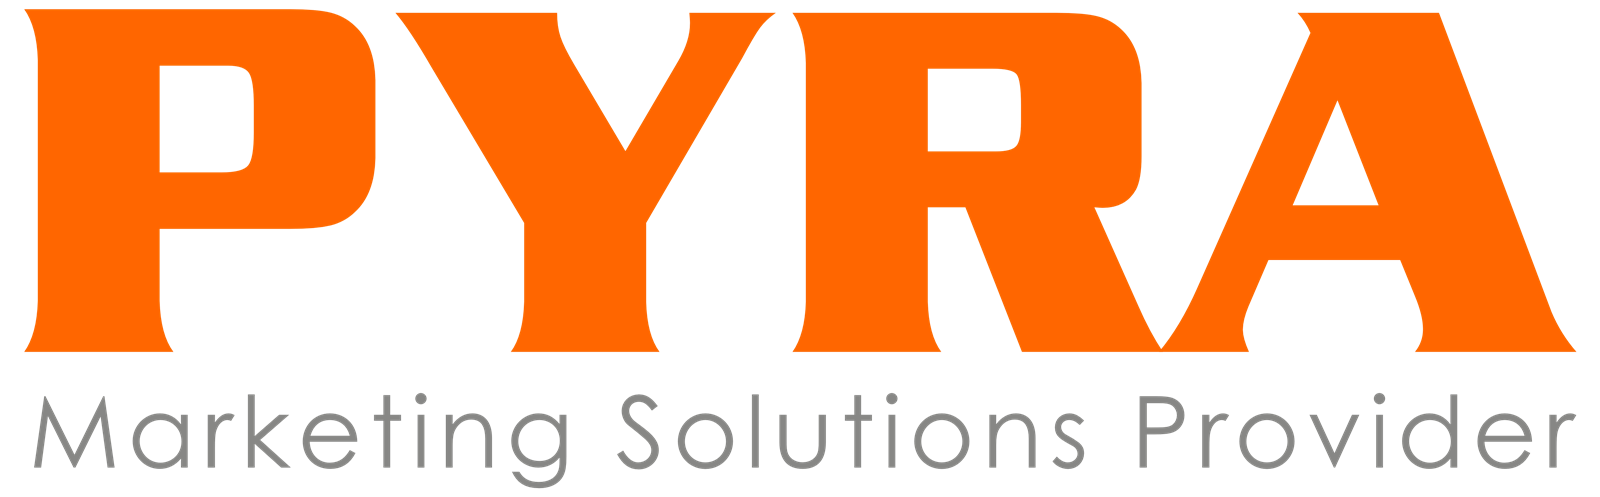 Pyra Marketing Solutions Provider